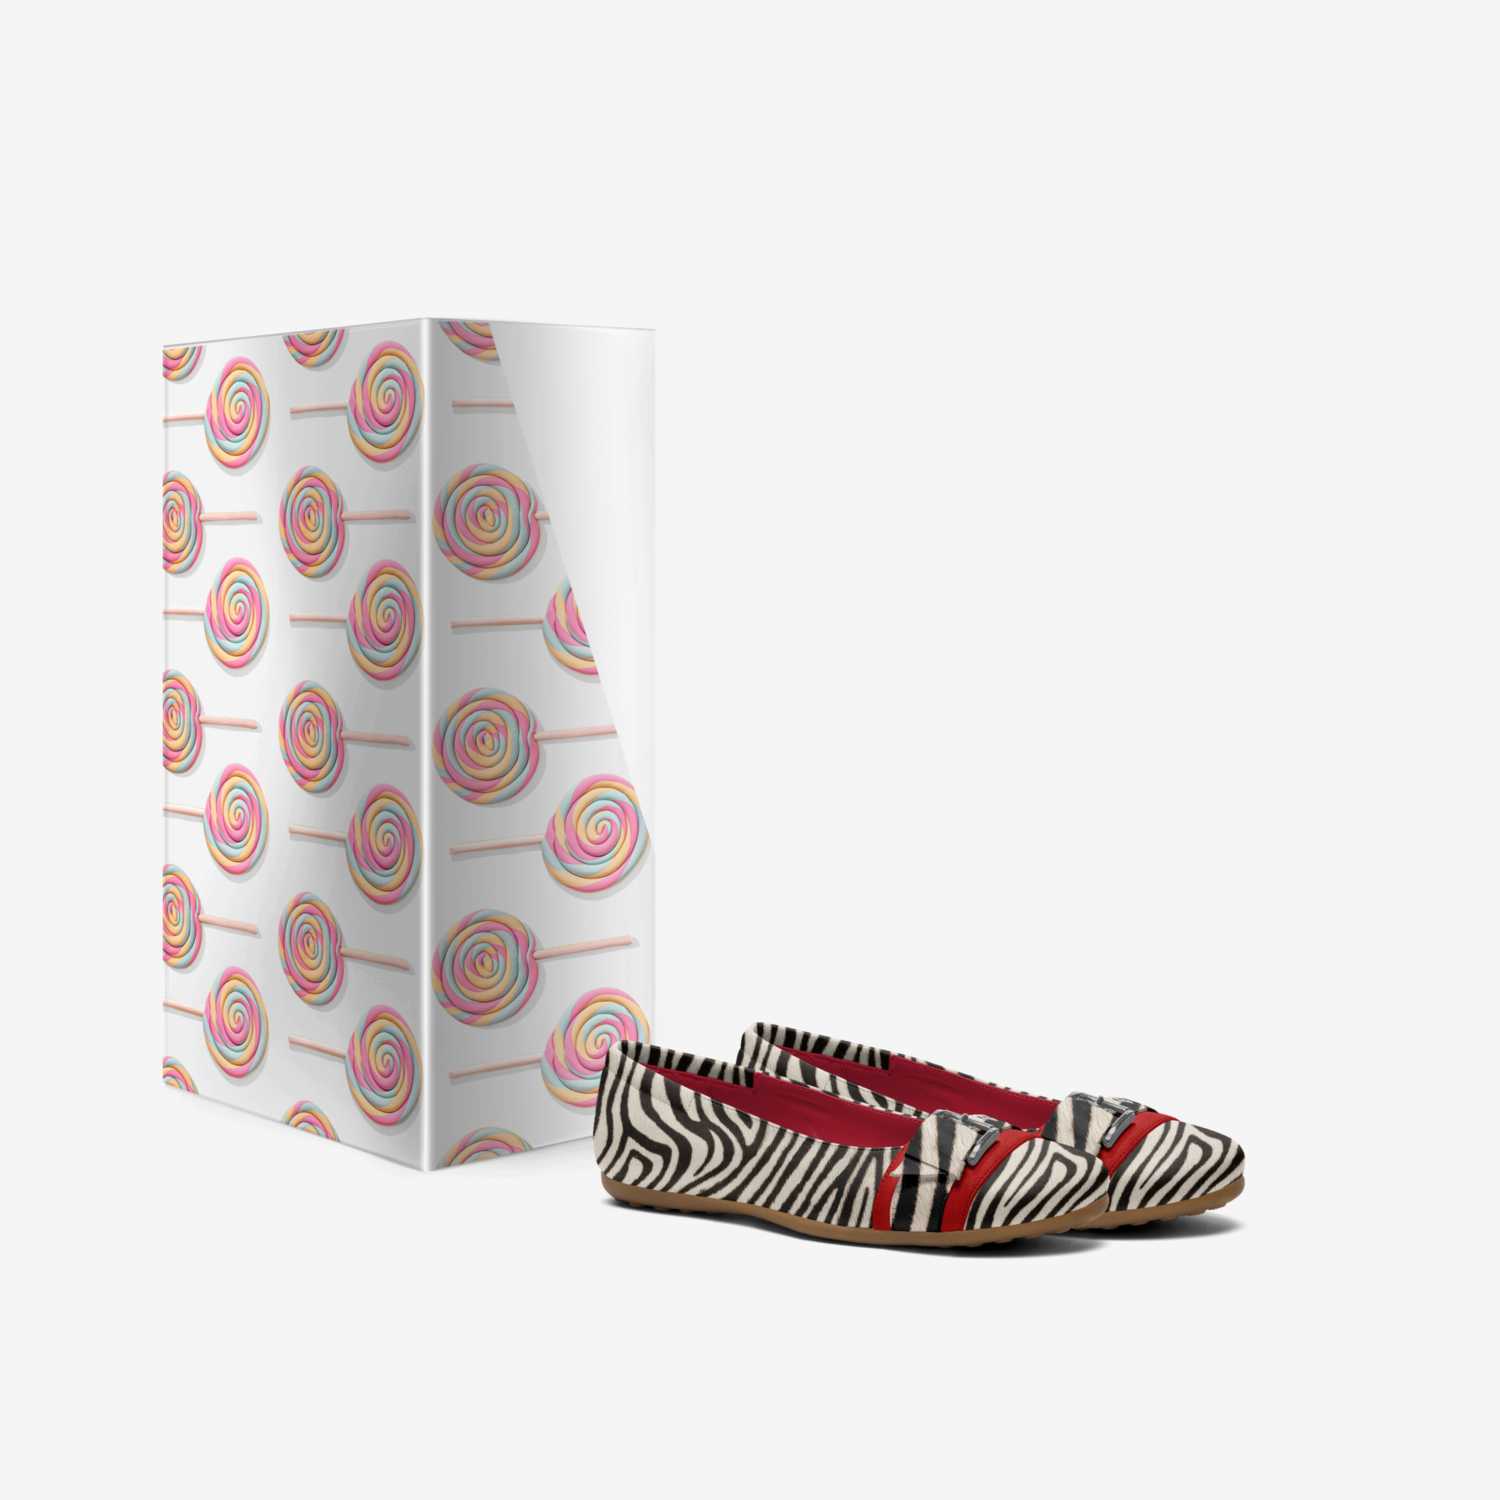 Cameron Kids custom made in Italy shoes by Anise Tatiana Wheeler | Box view